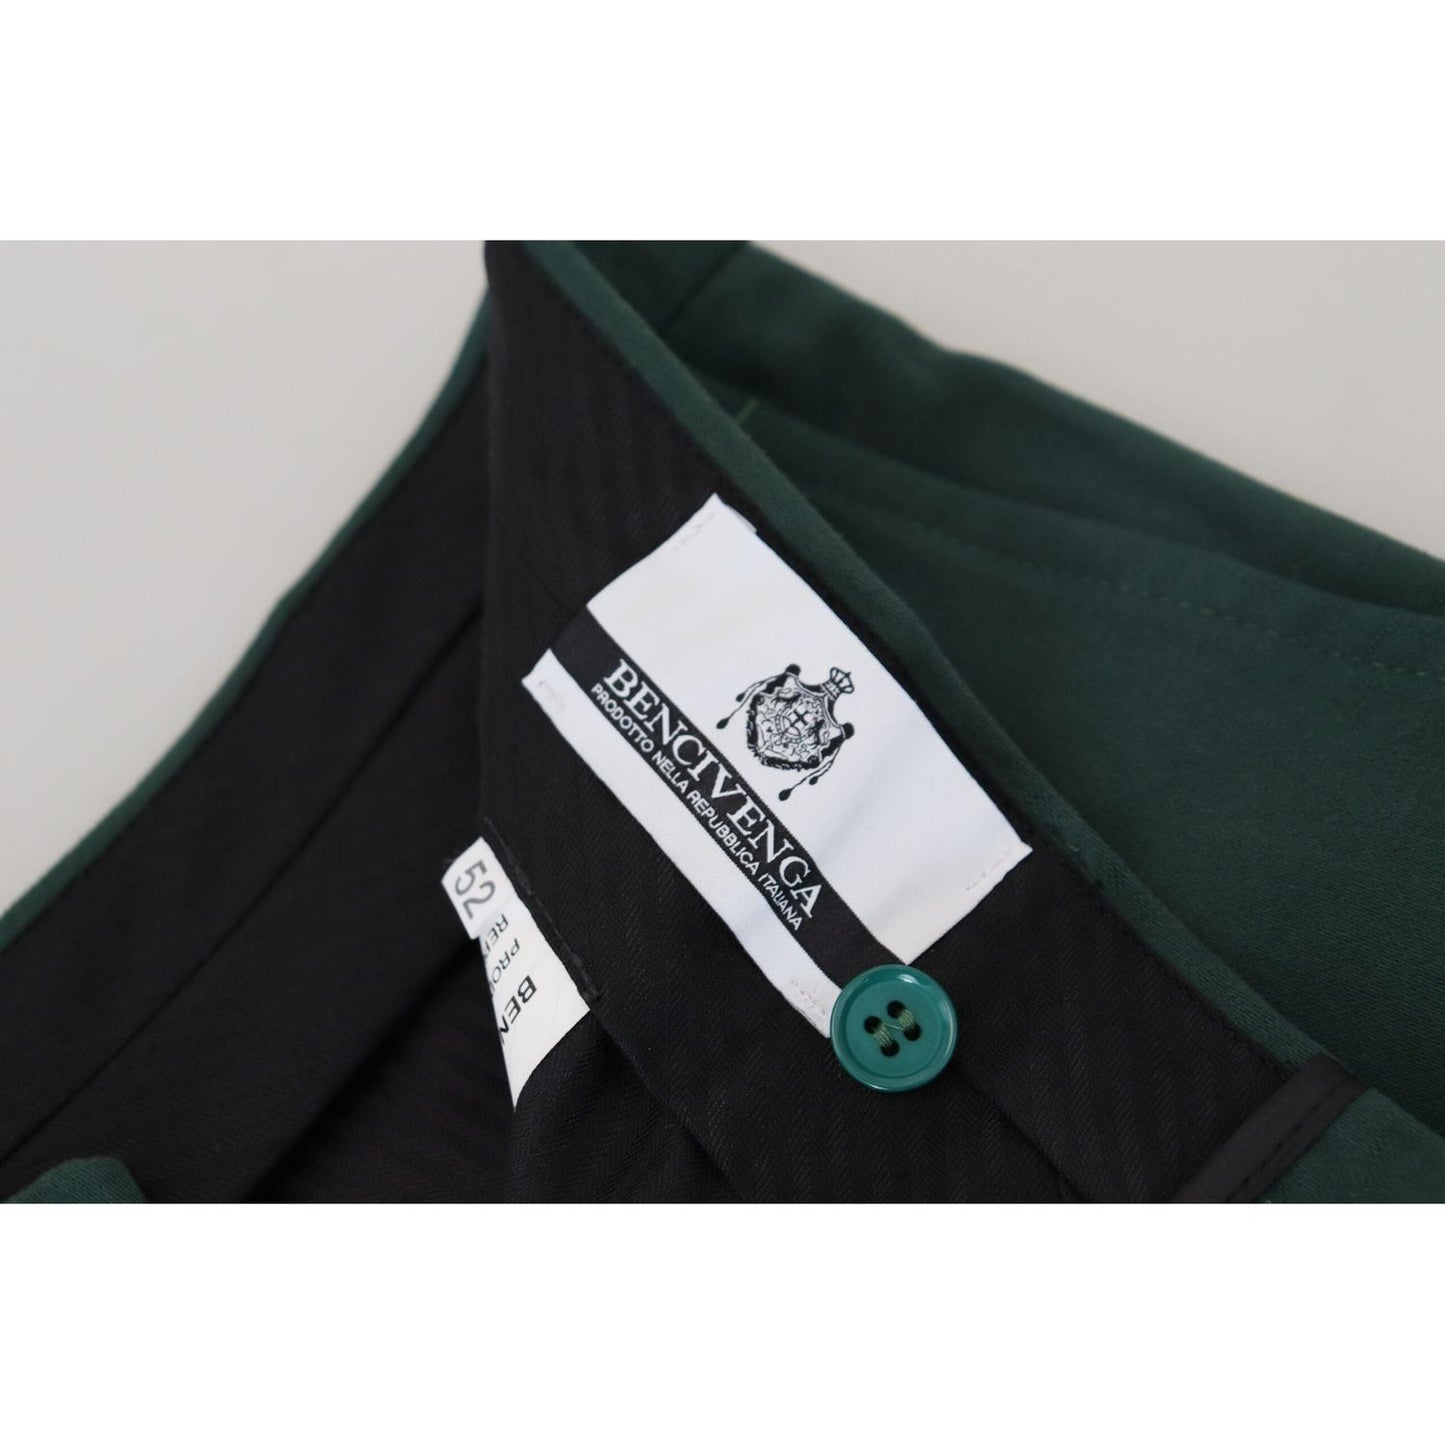 BENCIVENGAElegant Dark Green Chino TrousersMcRichard Designer Brands£119.00